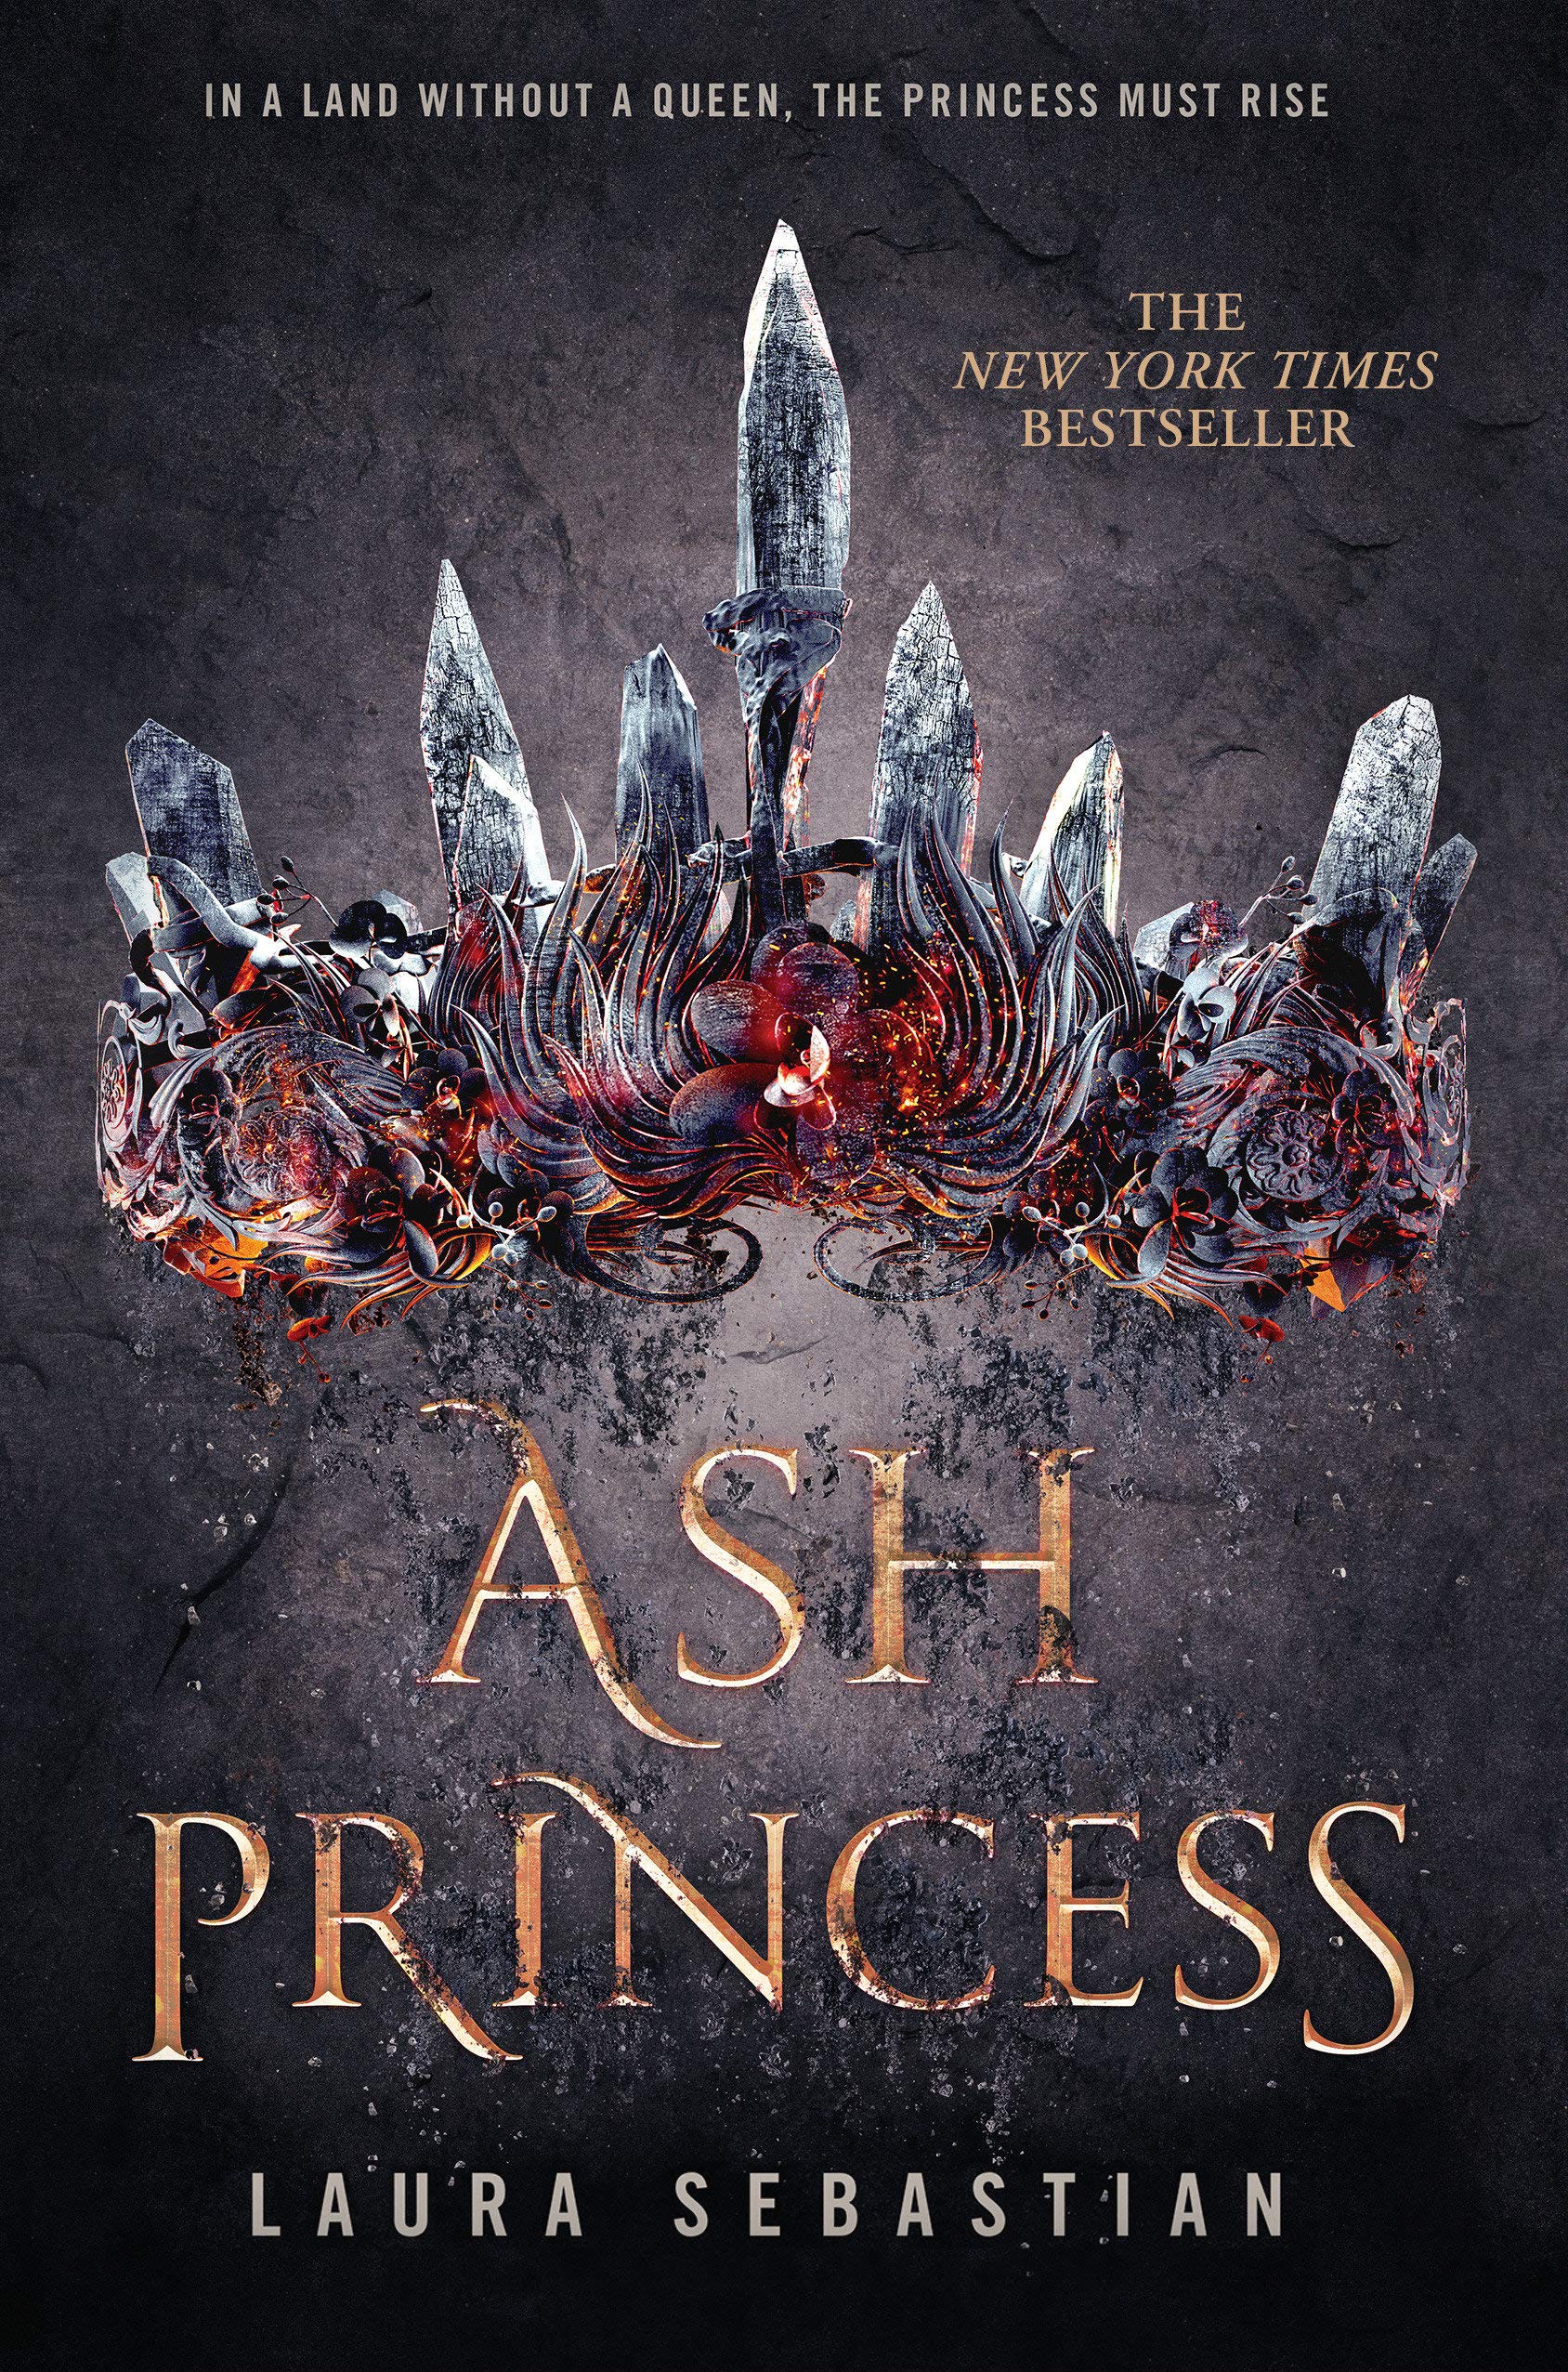 Cover image of the book Ash Princess by Laura Sebastian.